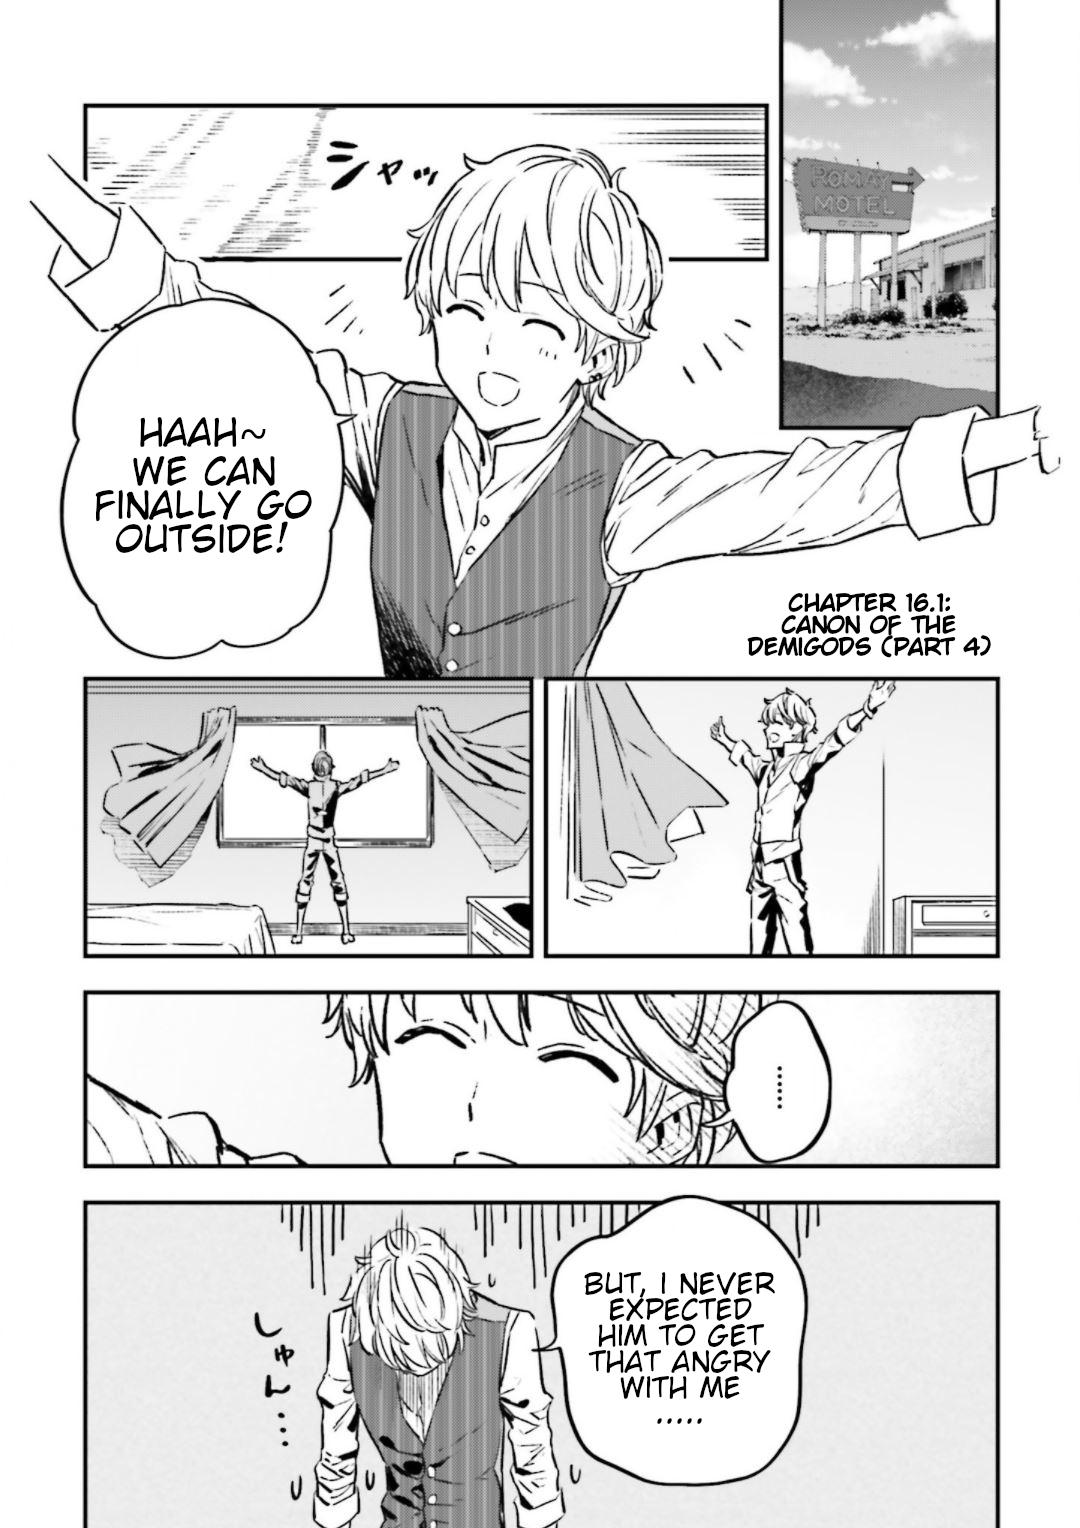 Fate Strange Fake Vol 4 Ch 16 1 Page 1 Mangago